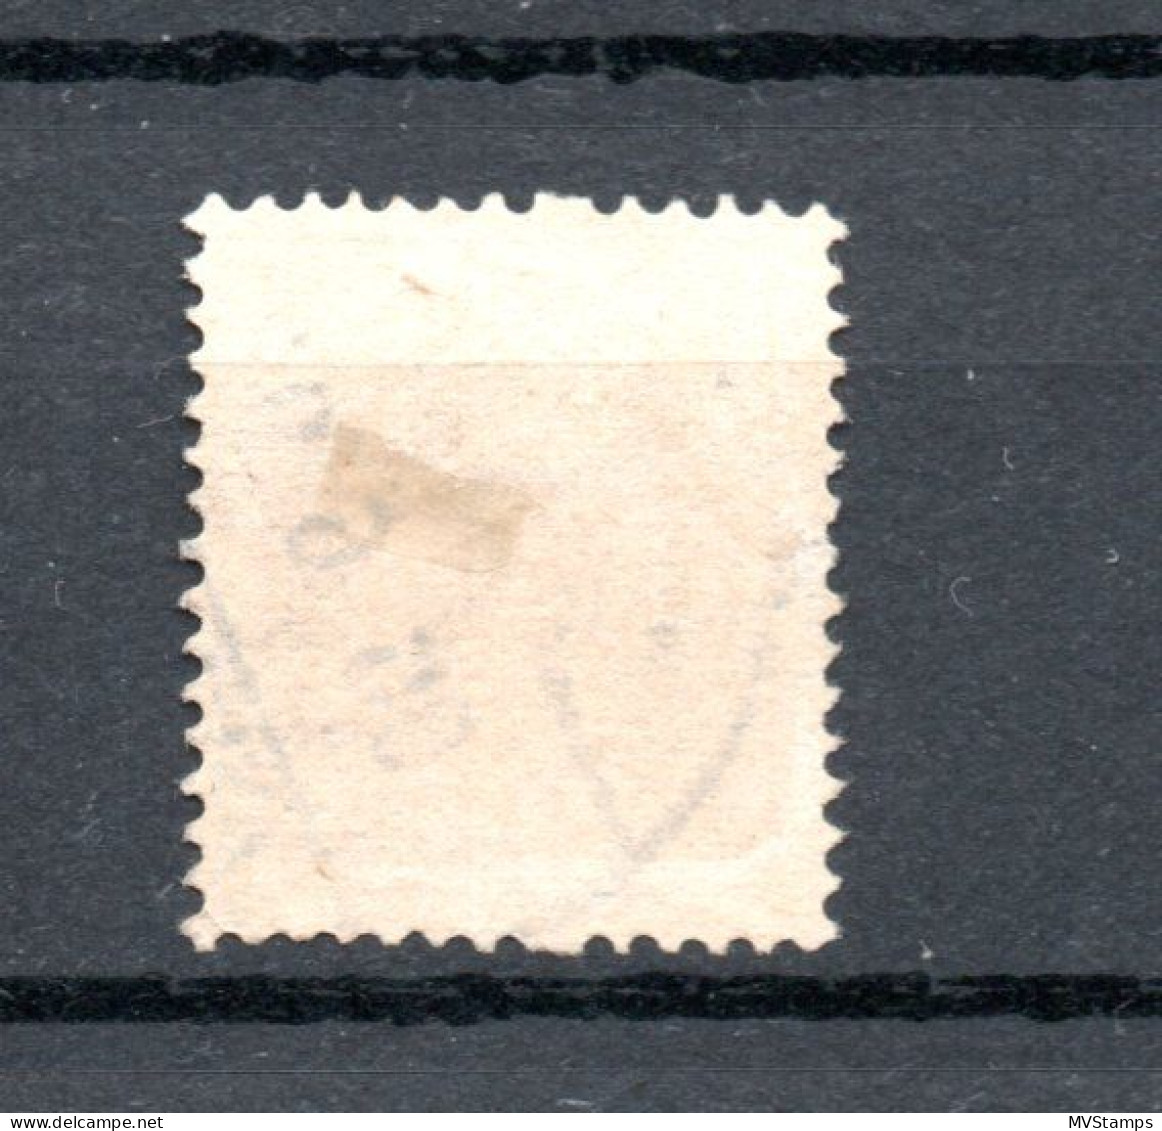 Iceland 1882 Old Posthorn Stamp (Michel 12 A), Misperforation Used - Usados